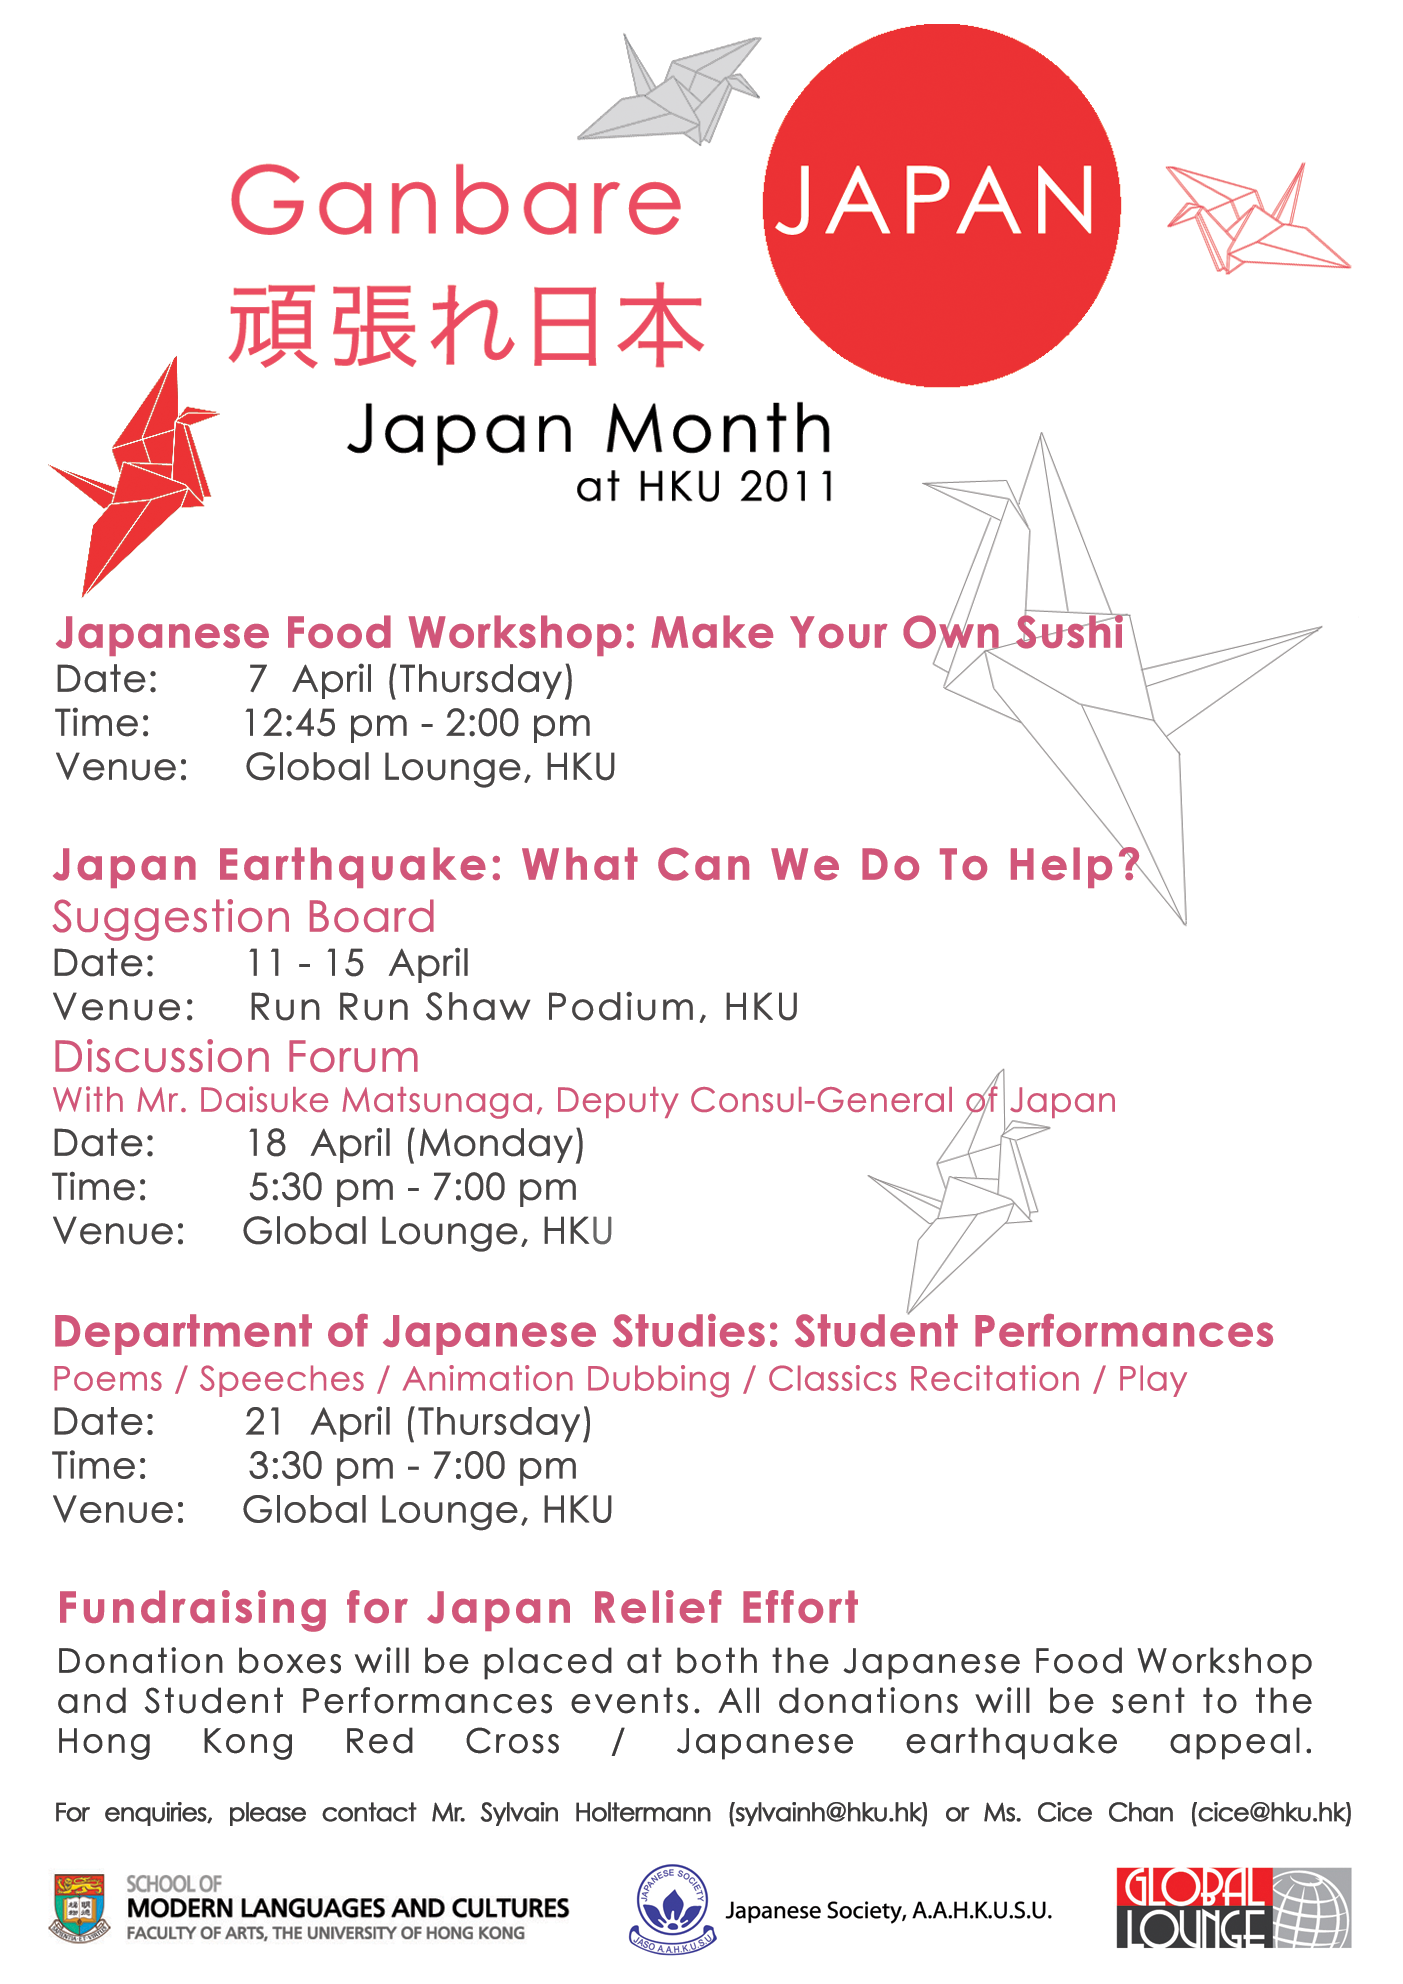 Japan Month at HKU 2011